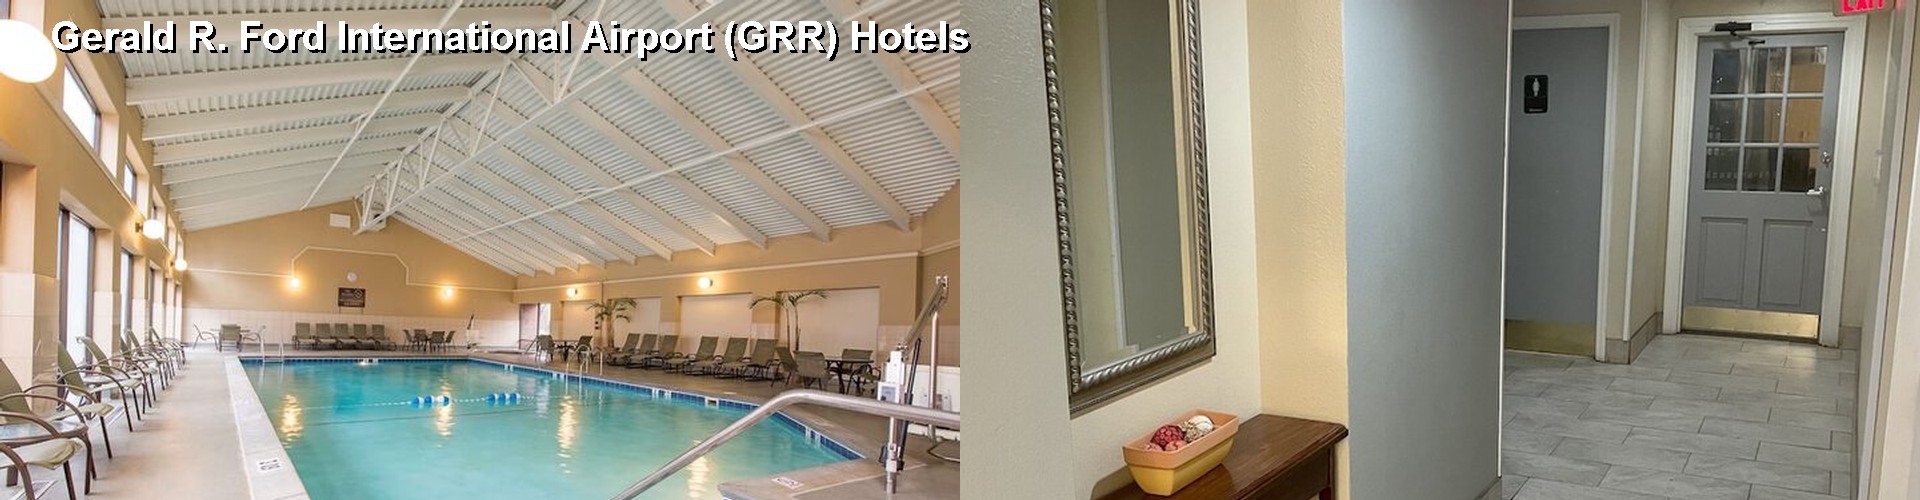 3 Best Hotels near Gerald R. Ford International Airport (GRR)